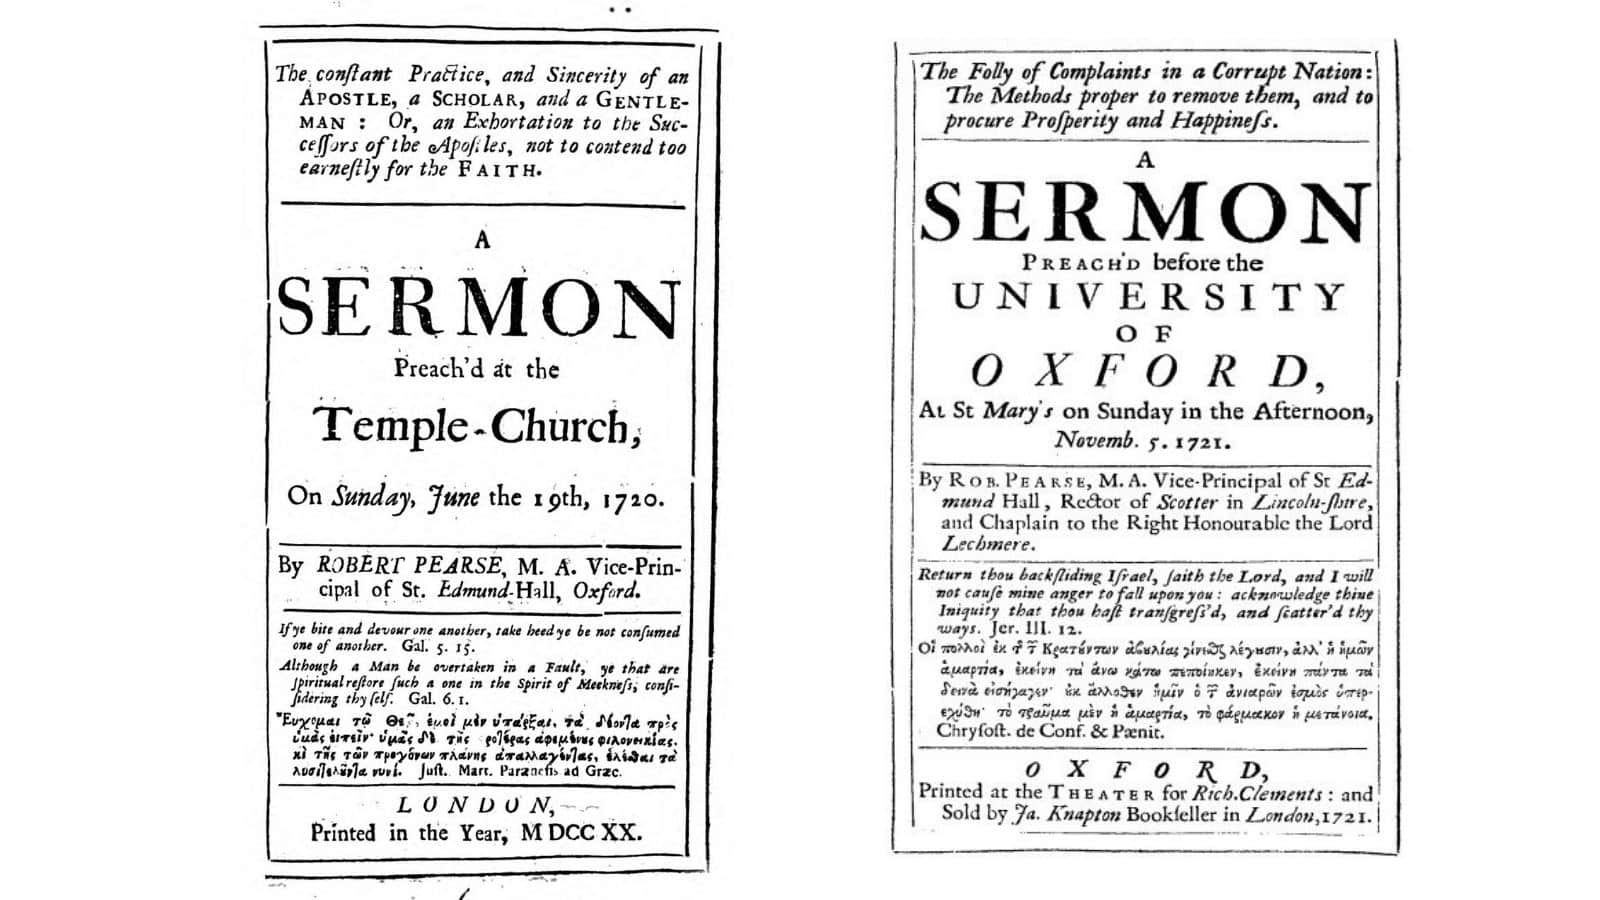 Sermon adverts by Robert Pearse